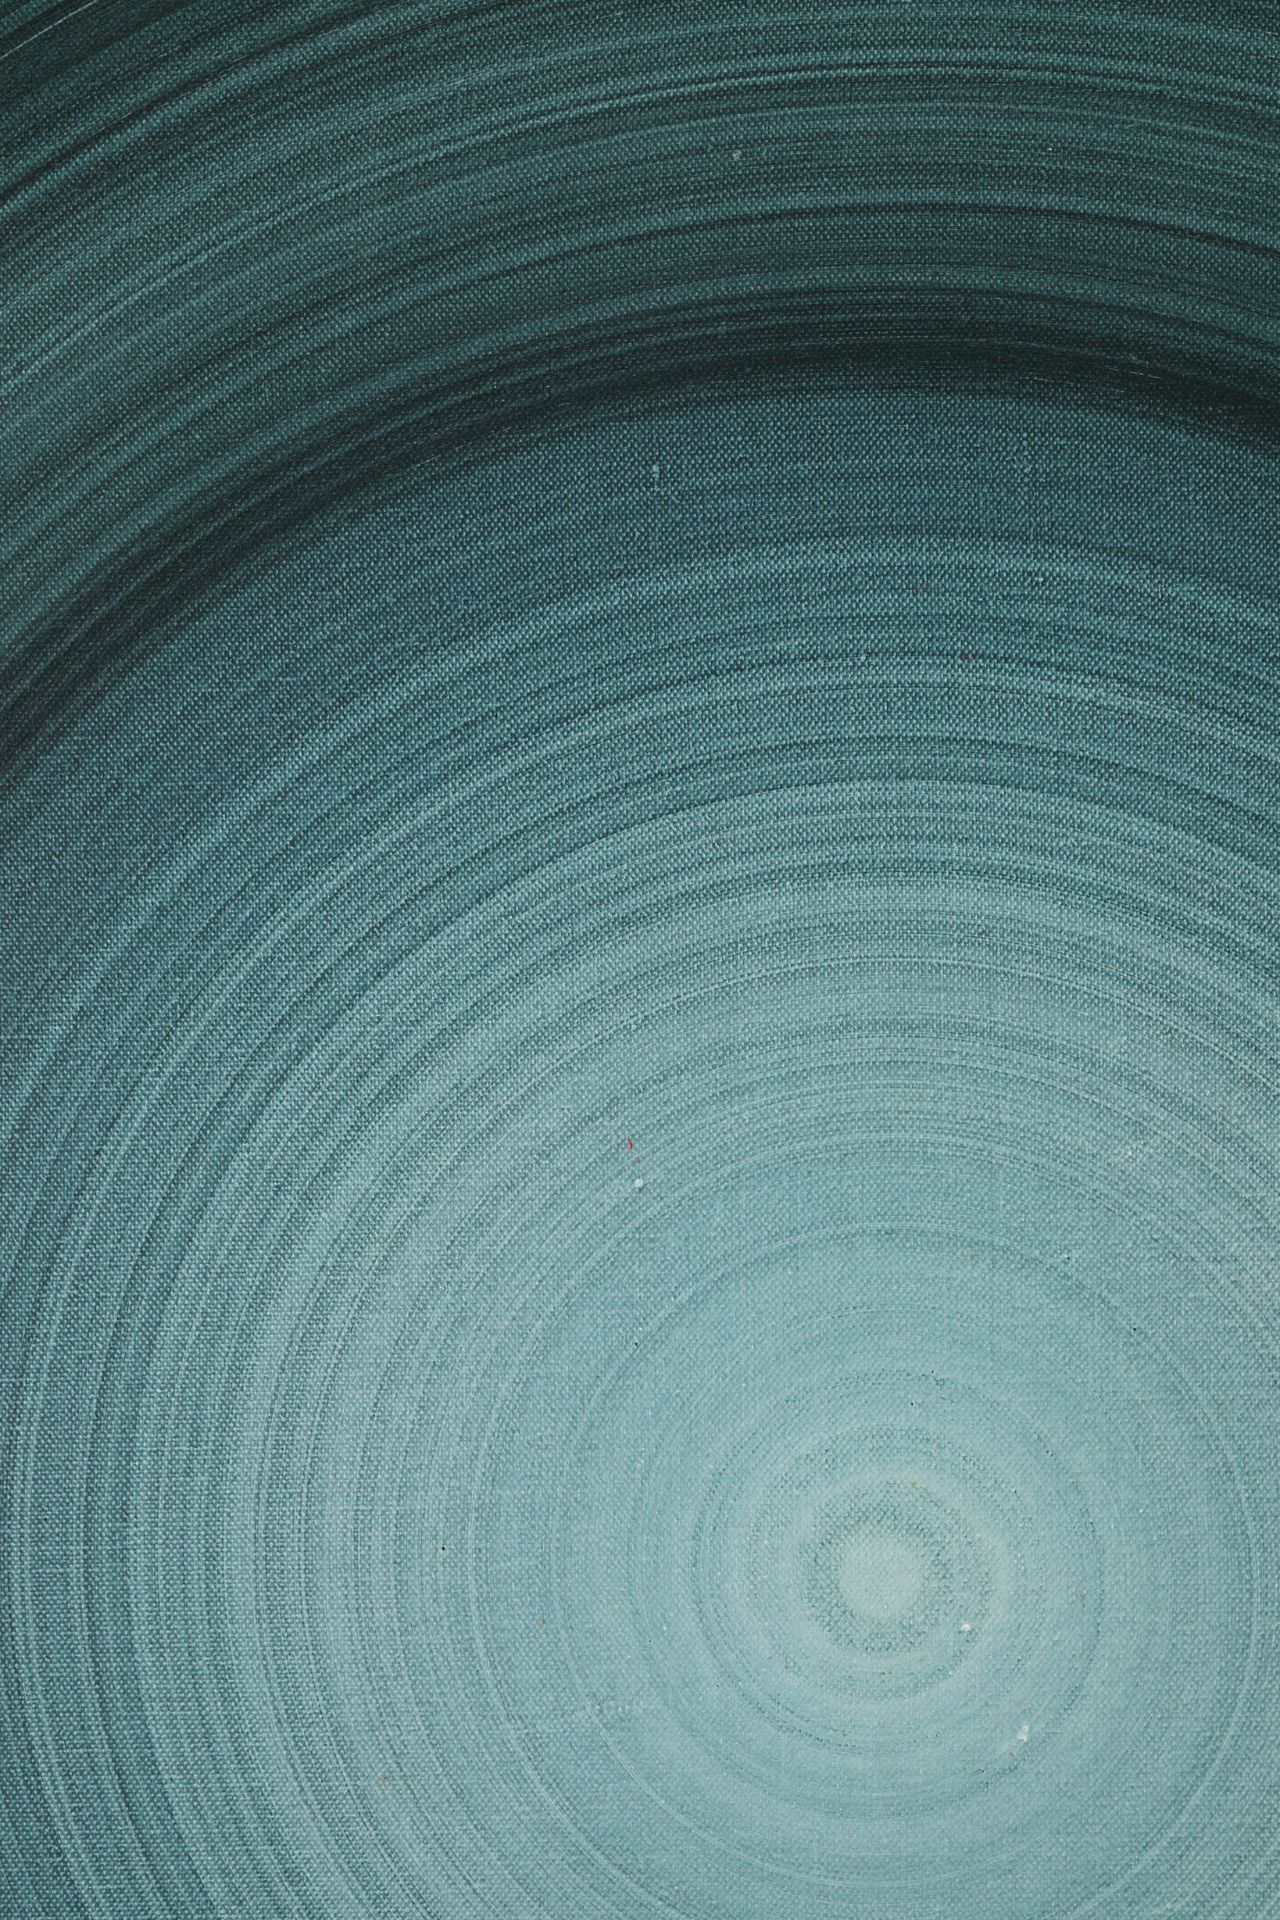 Robert Rotar*, Rotation, 1965, Large spiral green, canvas, 80 x 80 cm - Image 3 of 5